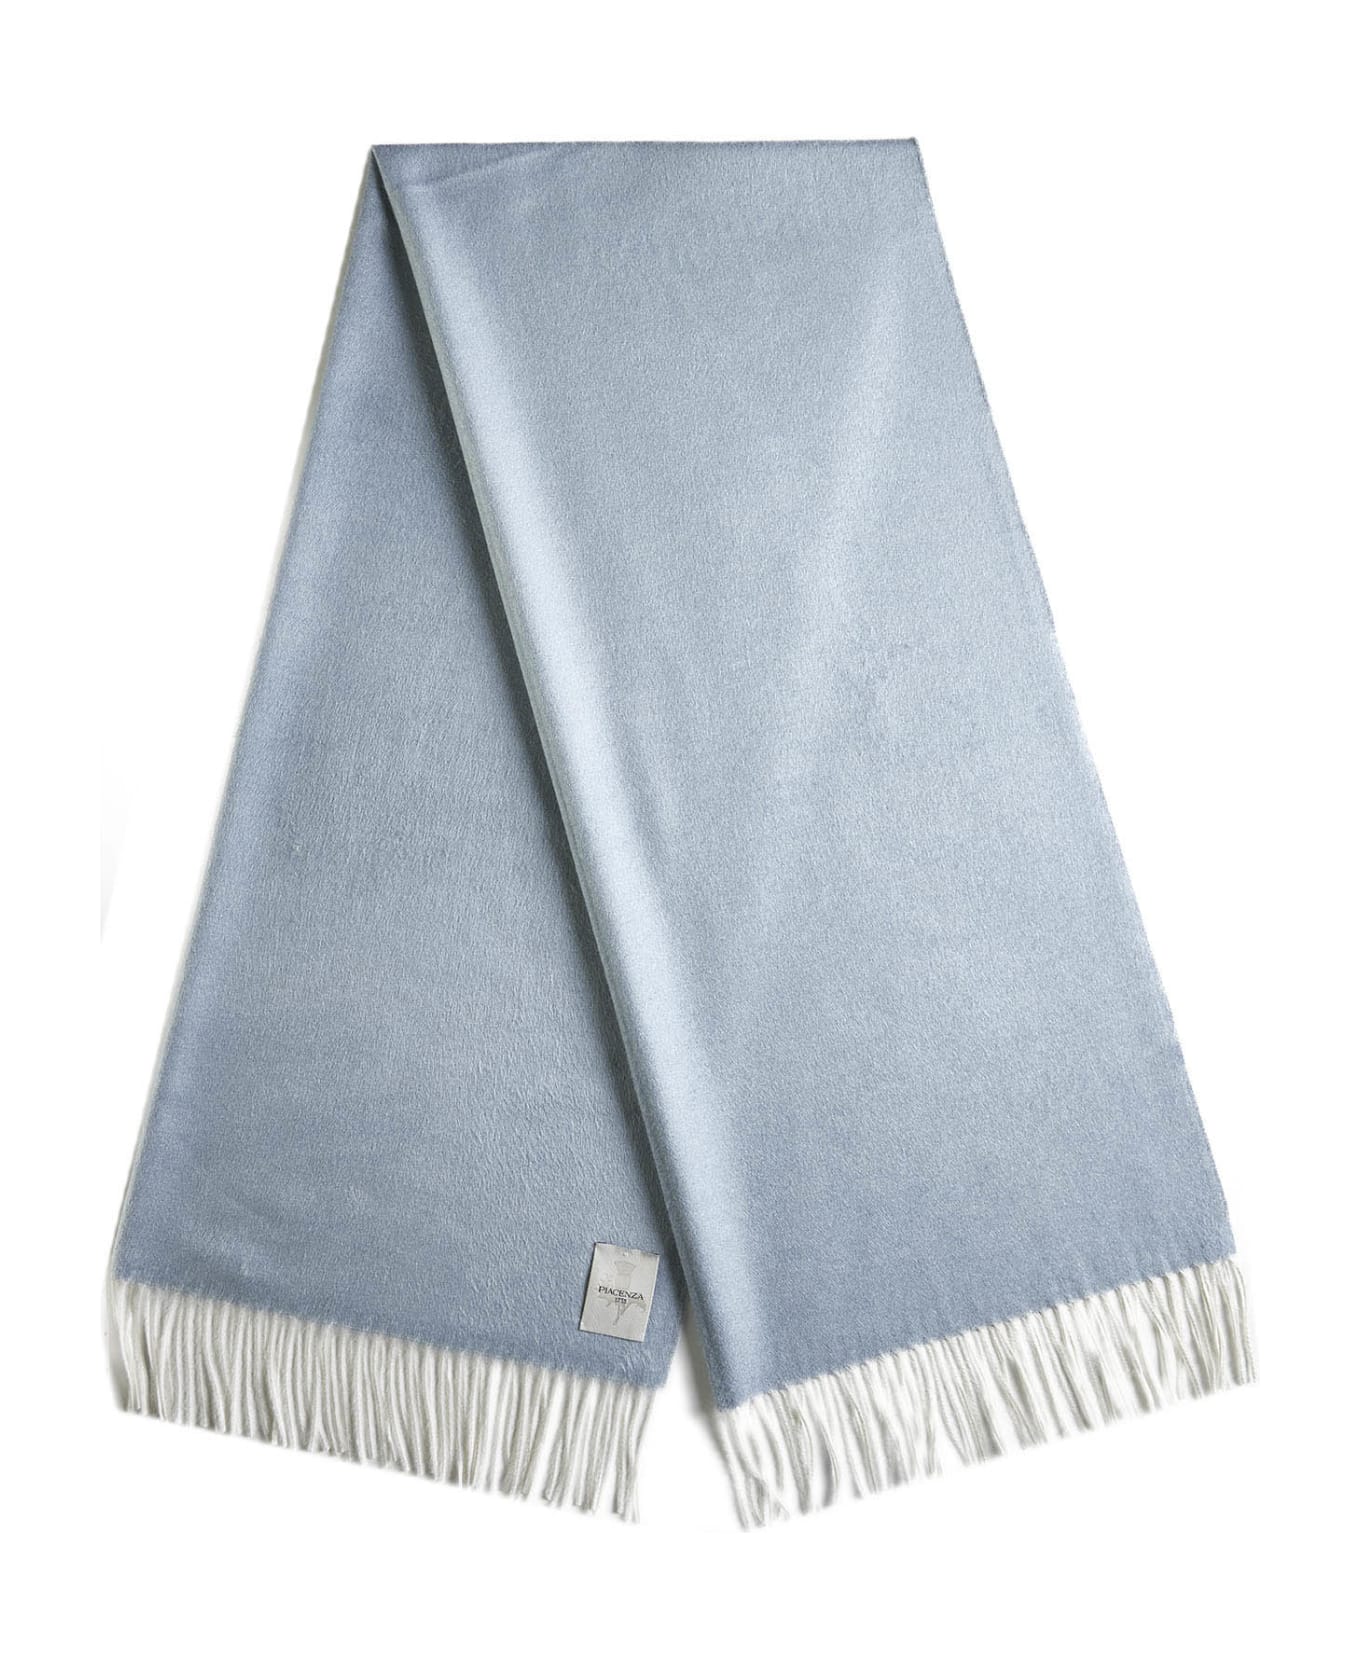 Piacenza Cashmere Scarf - Lt blue/ lt grey スカーフ